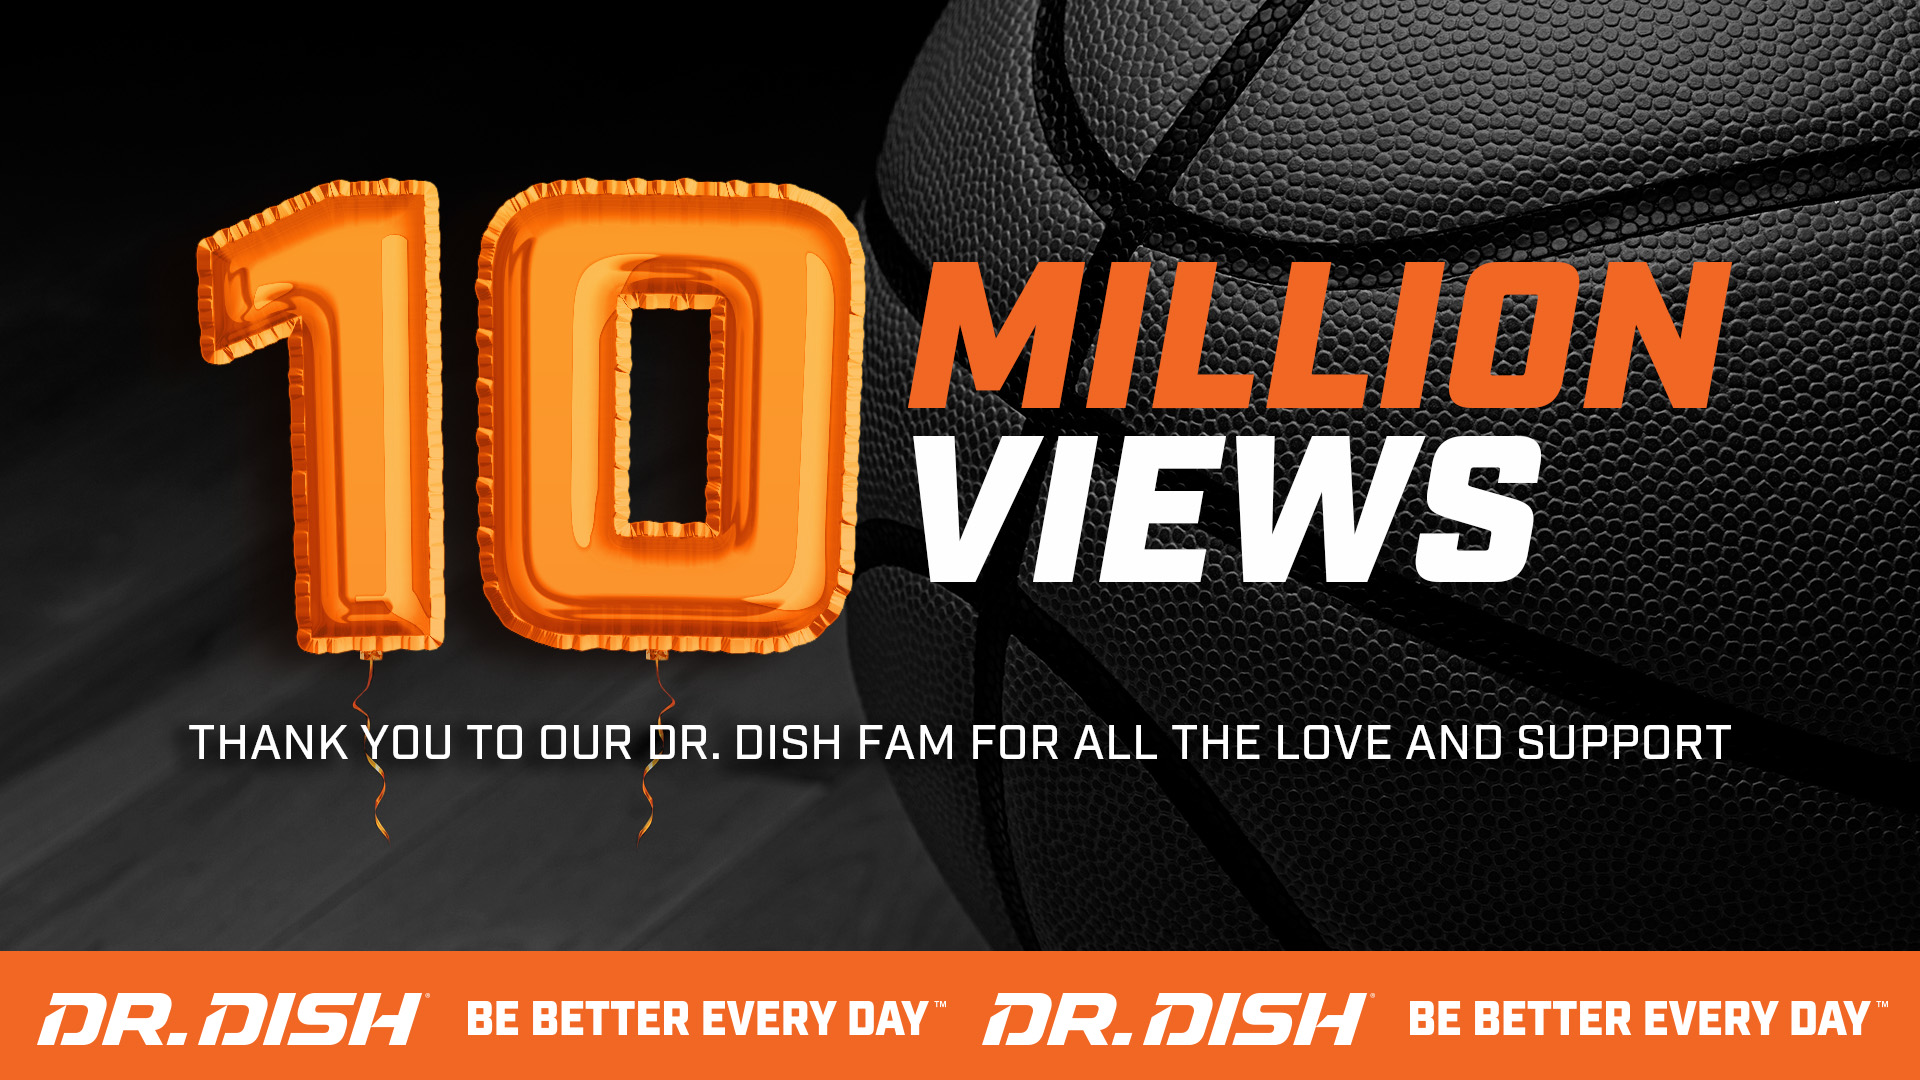 Dr. Dish Celebrates 10,000,000 Views on YouTube